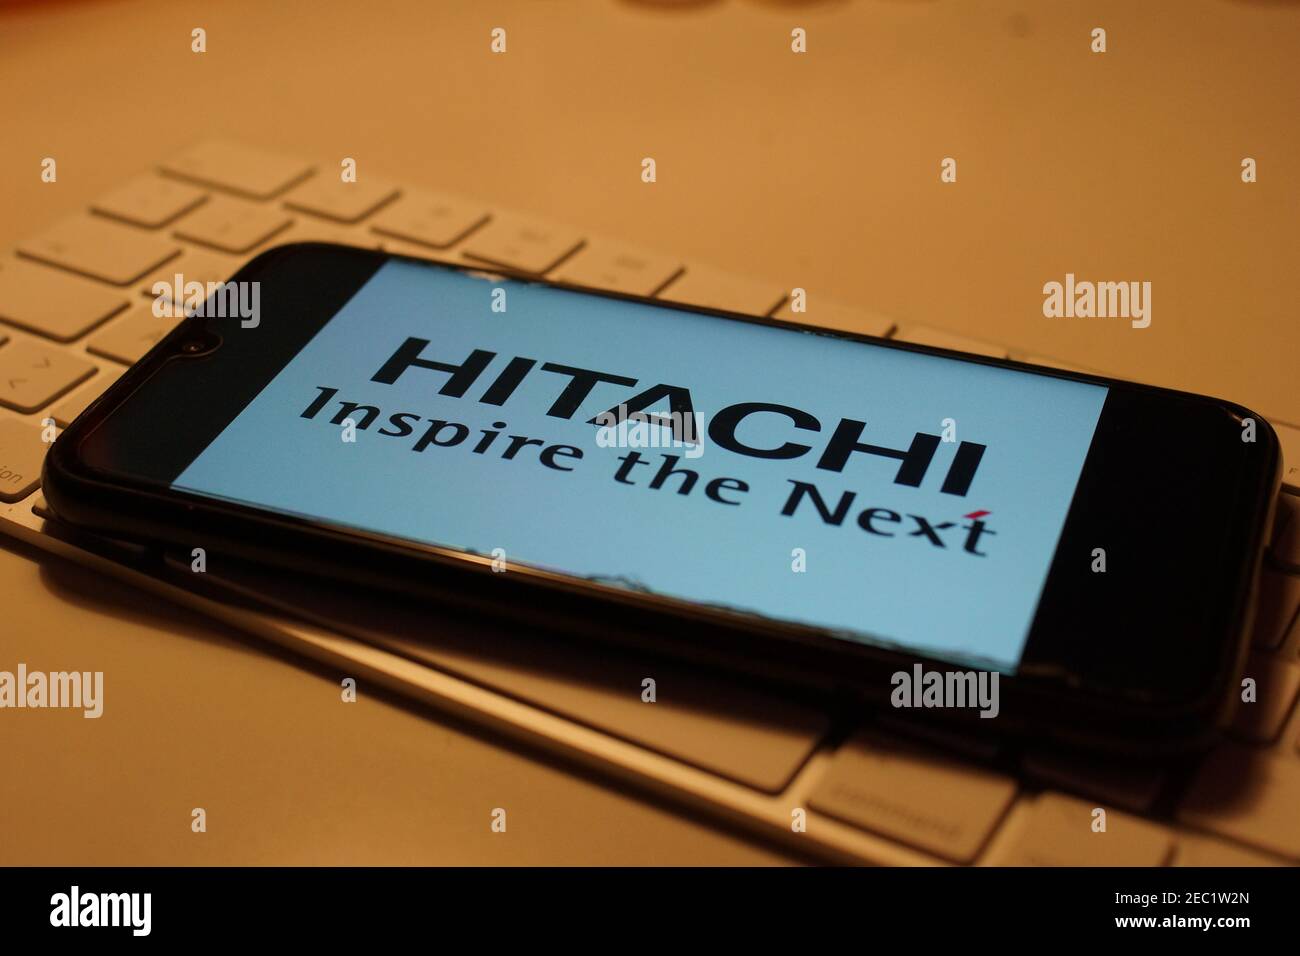 Smartphone with Hitachi logo on computer keyboard Stock Photo